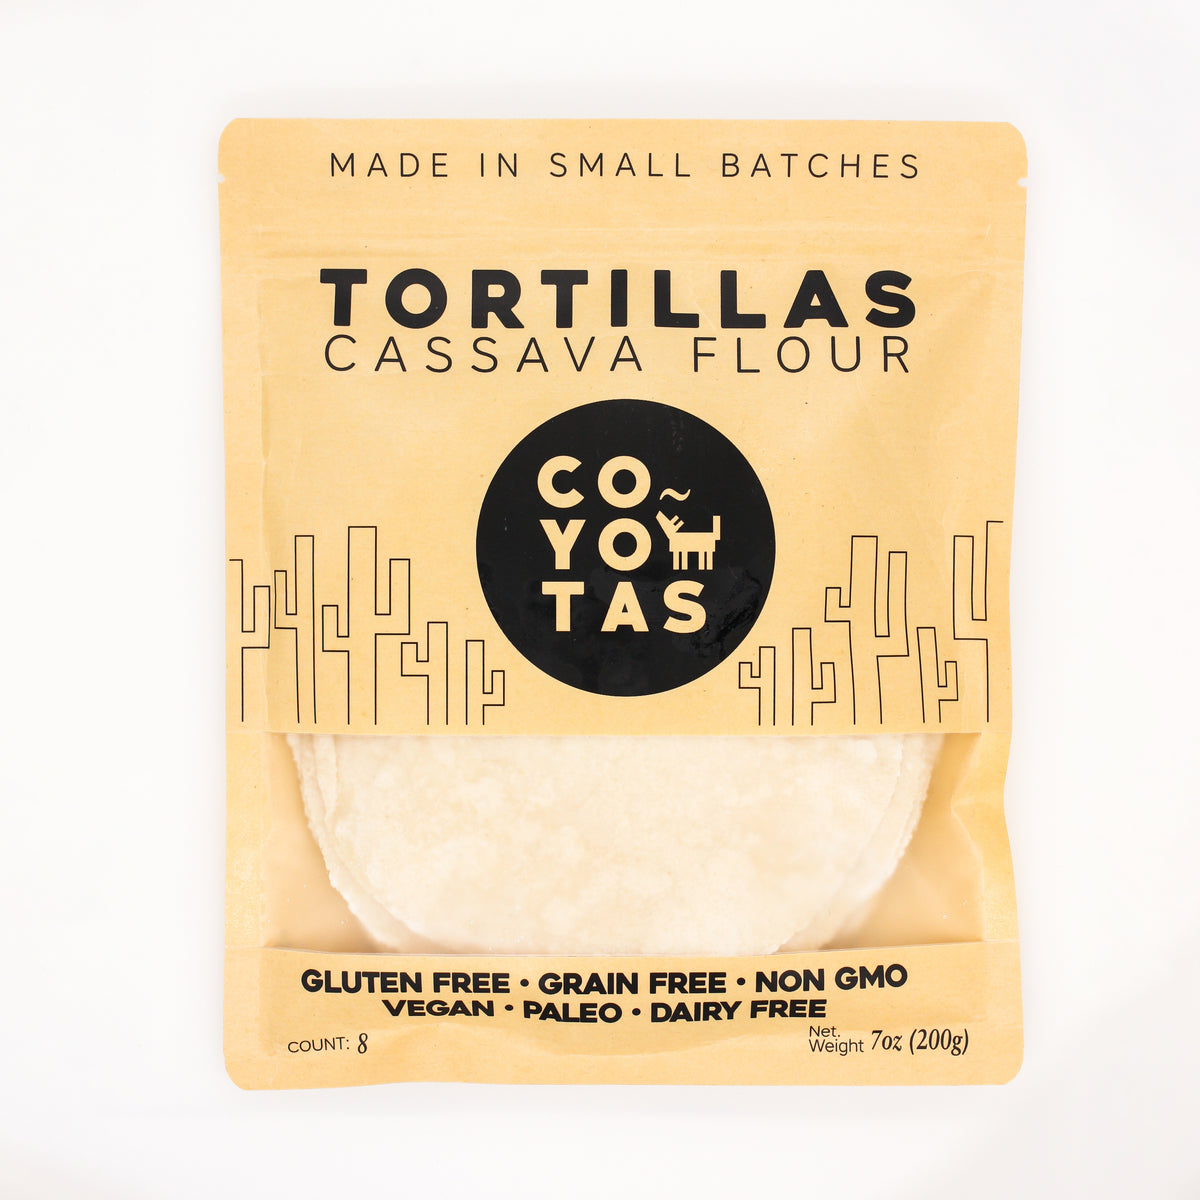 Coyotas Tortillas